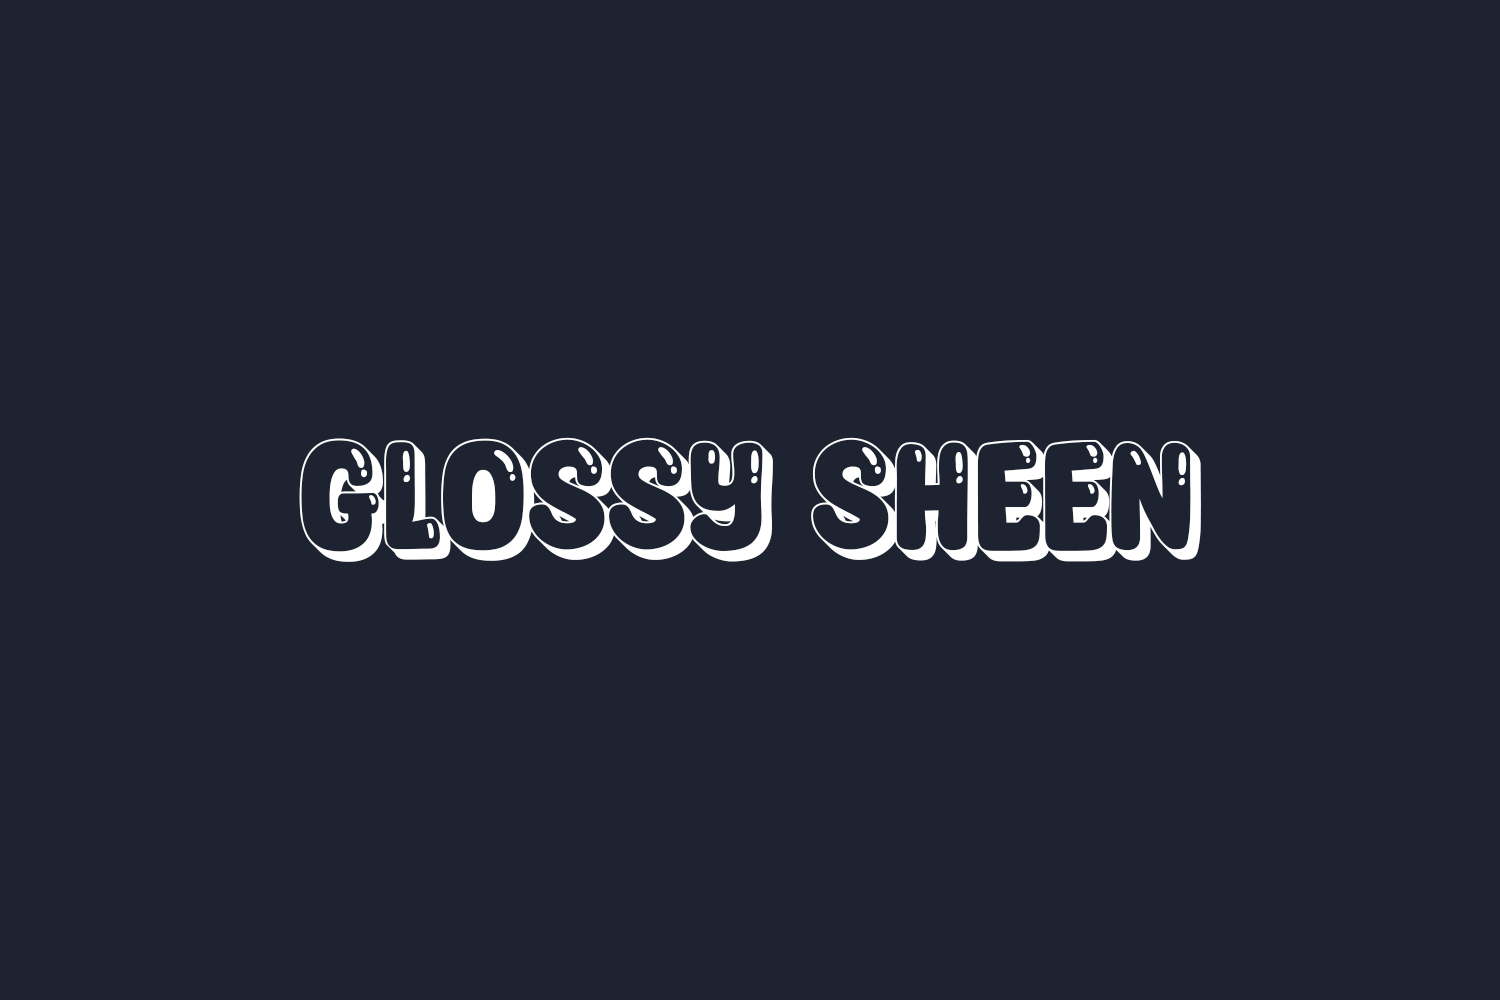 Glossy Sheen Free Font